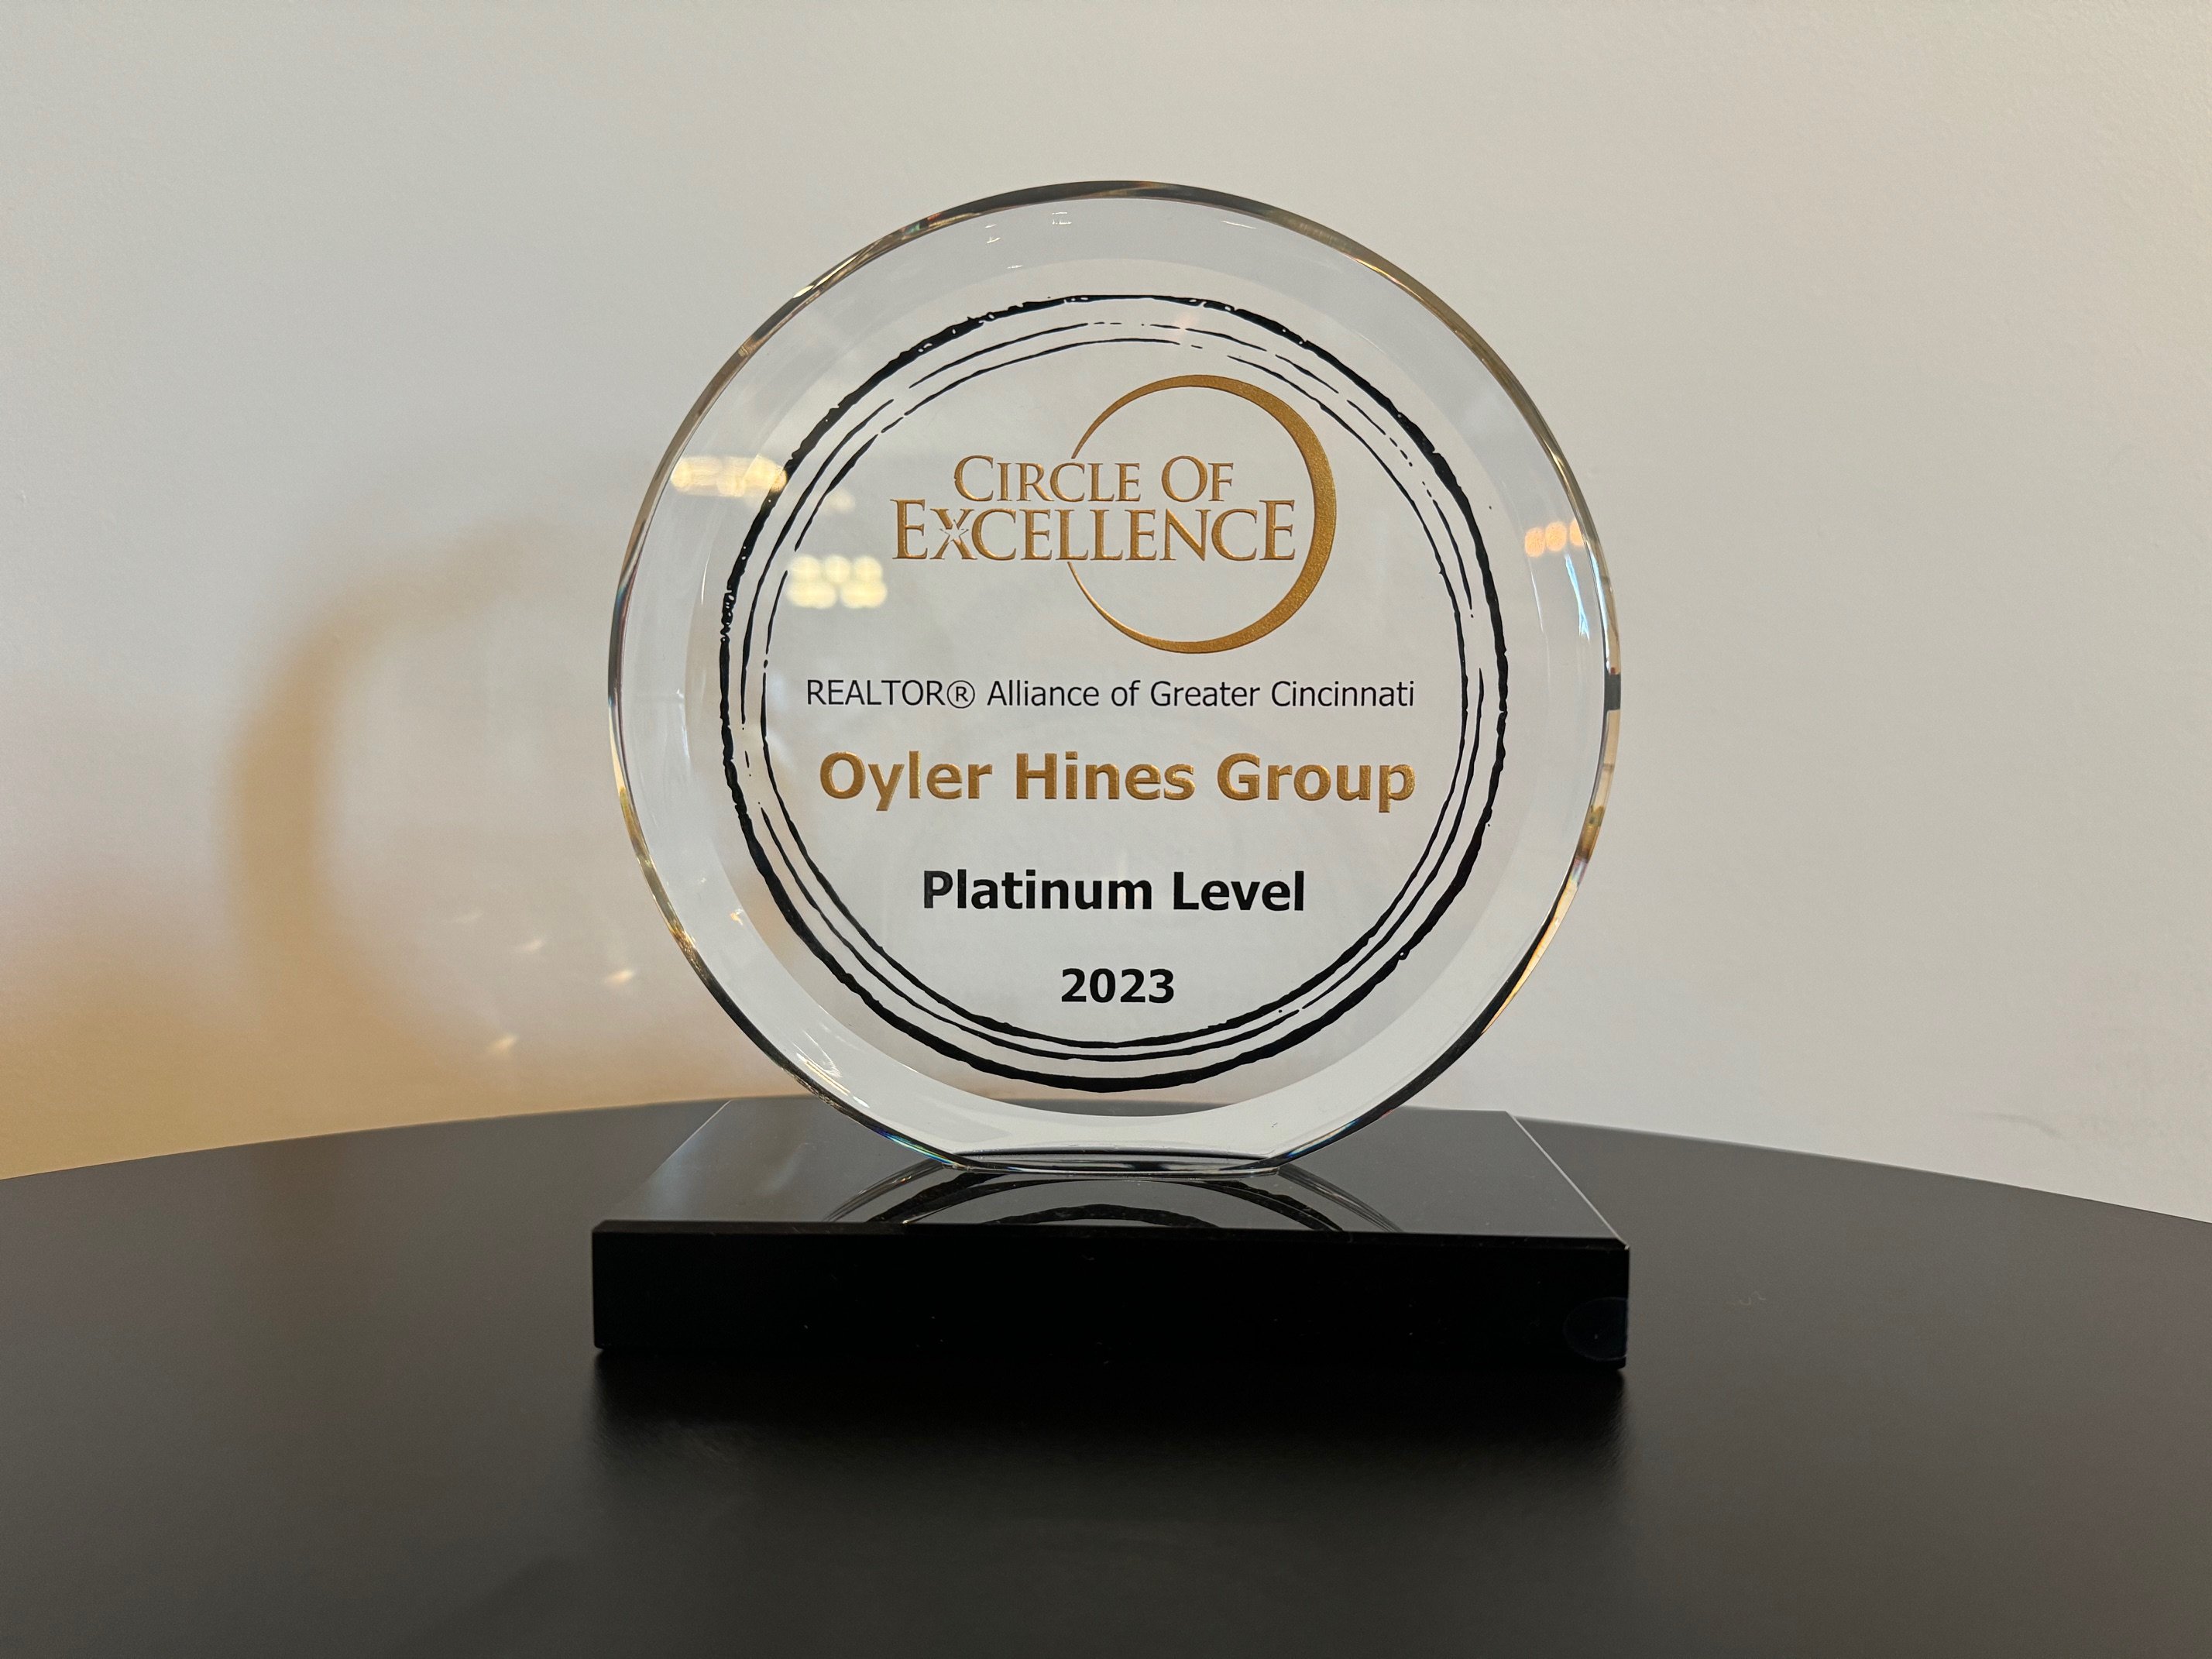 Realtor Alliance Award for 2023 Oyler Hines - Cincinnati Realtor